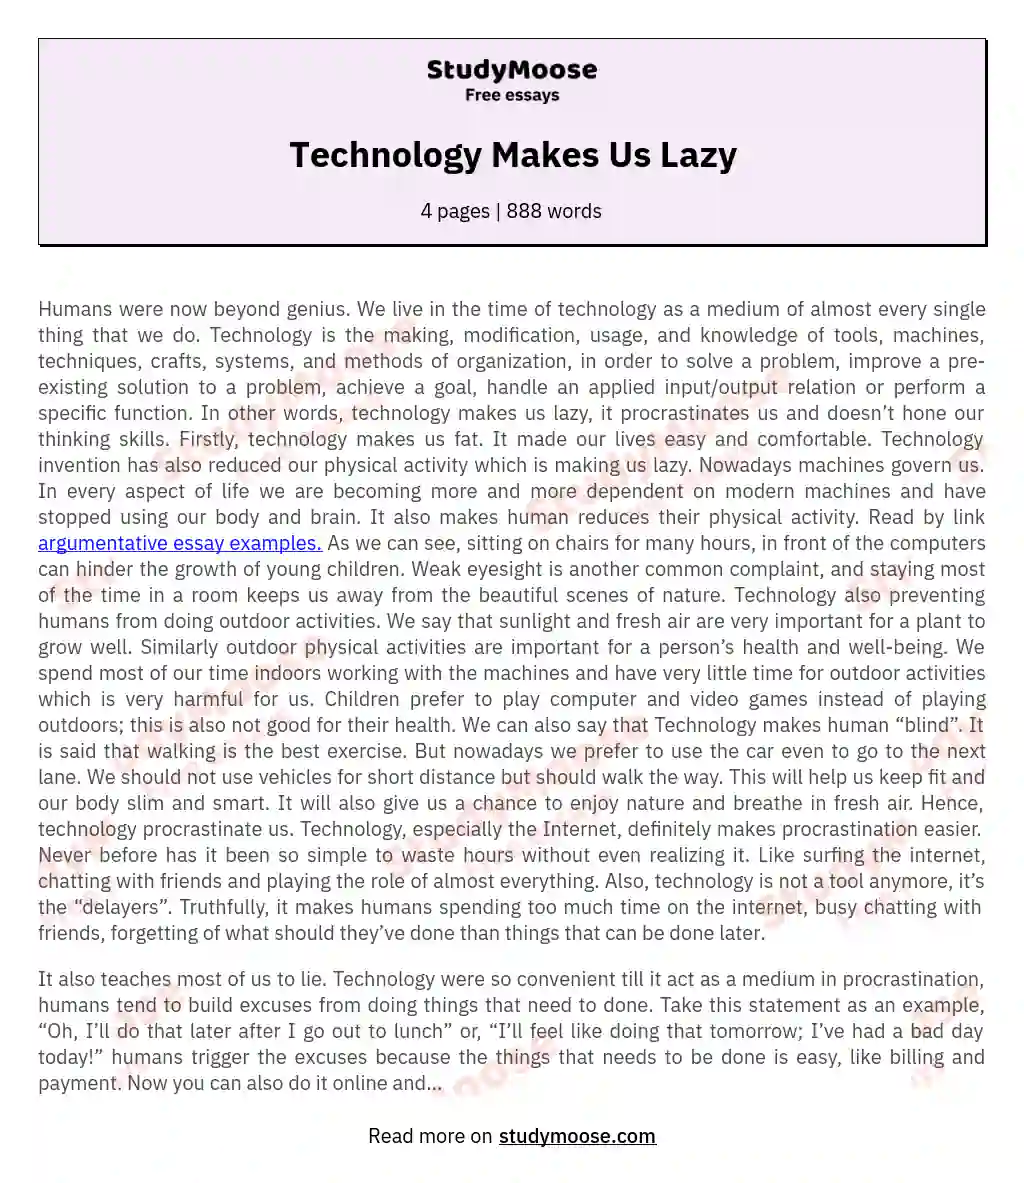 Technology Makes Us Lazy essay